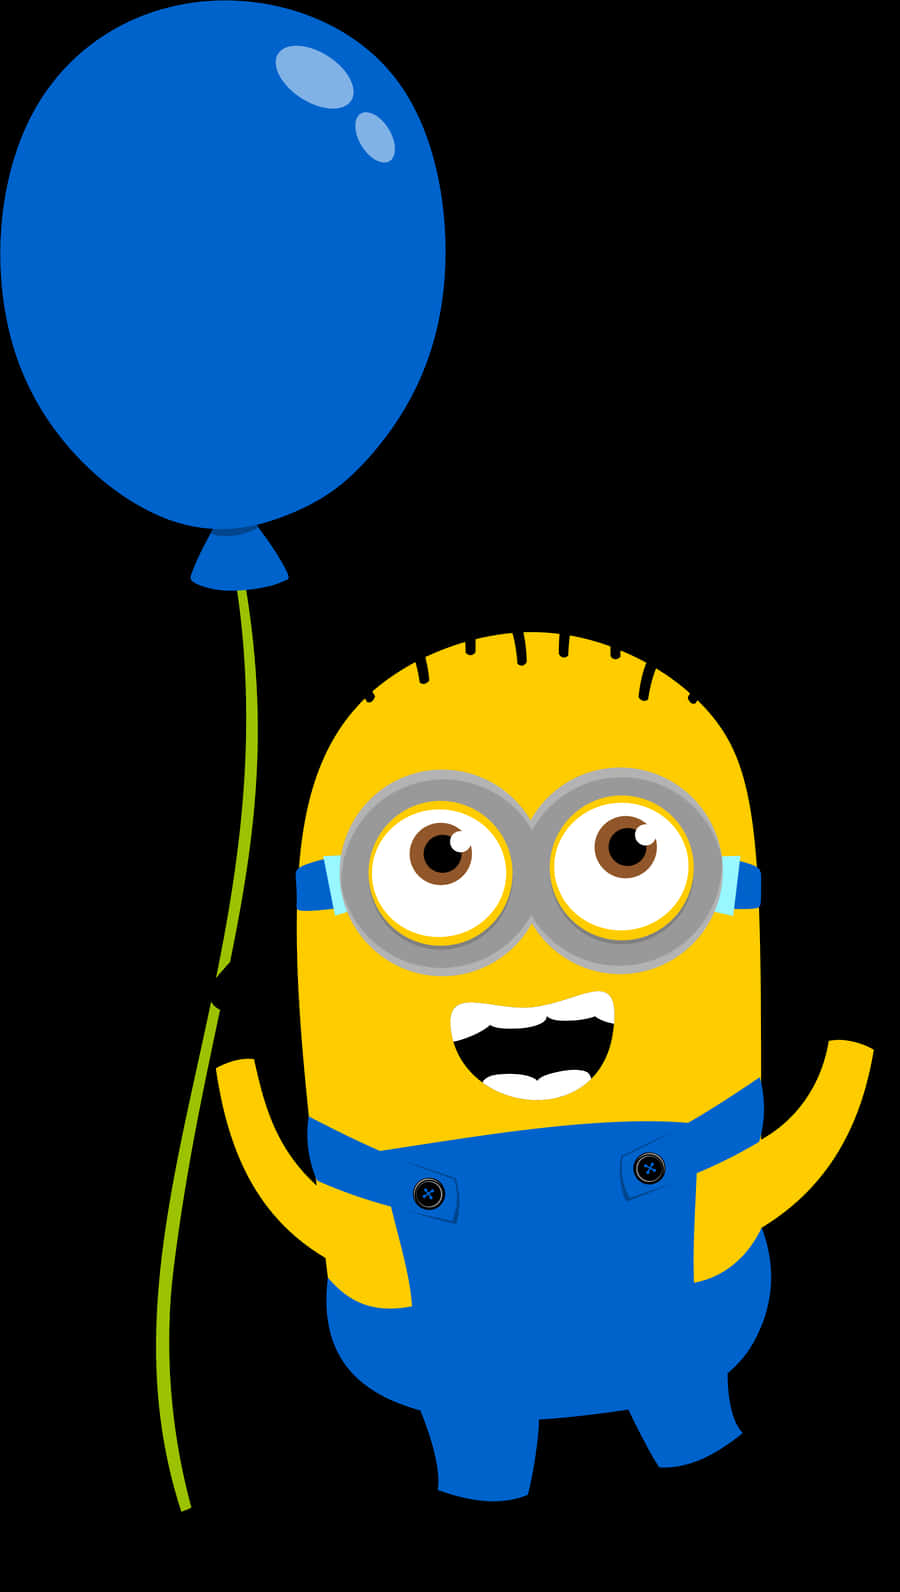 A Cartoon Character Holding A Balloon